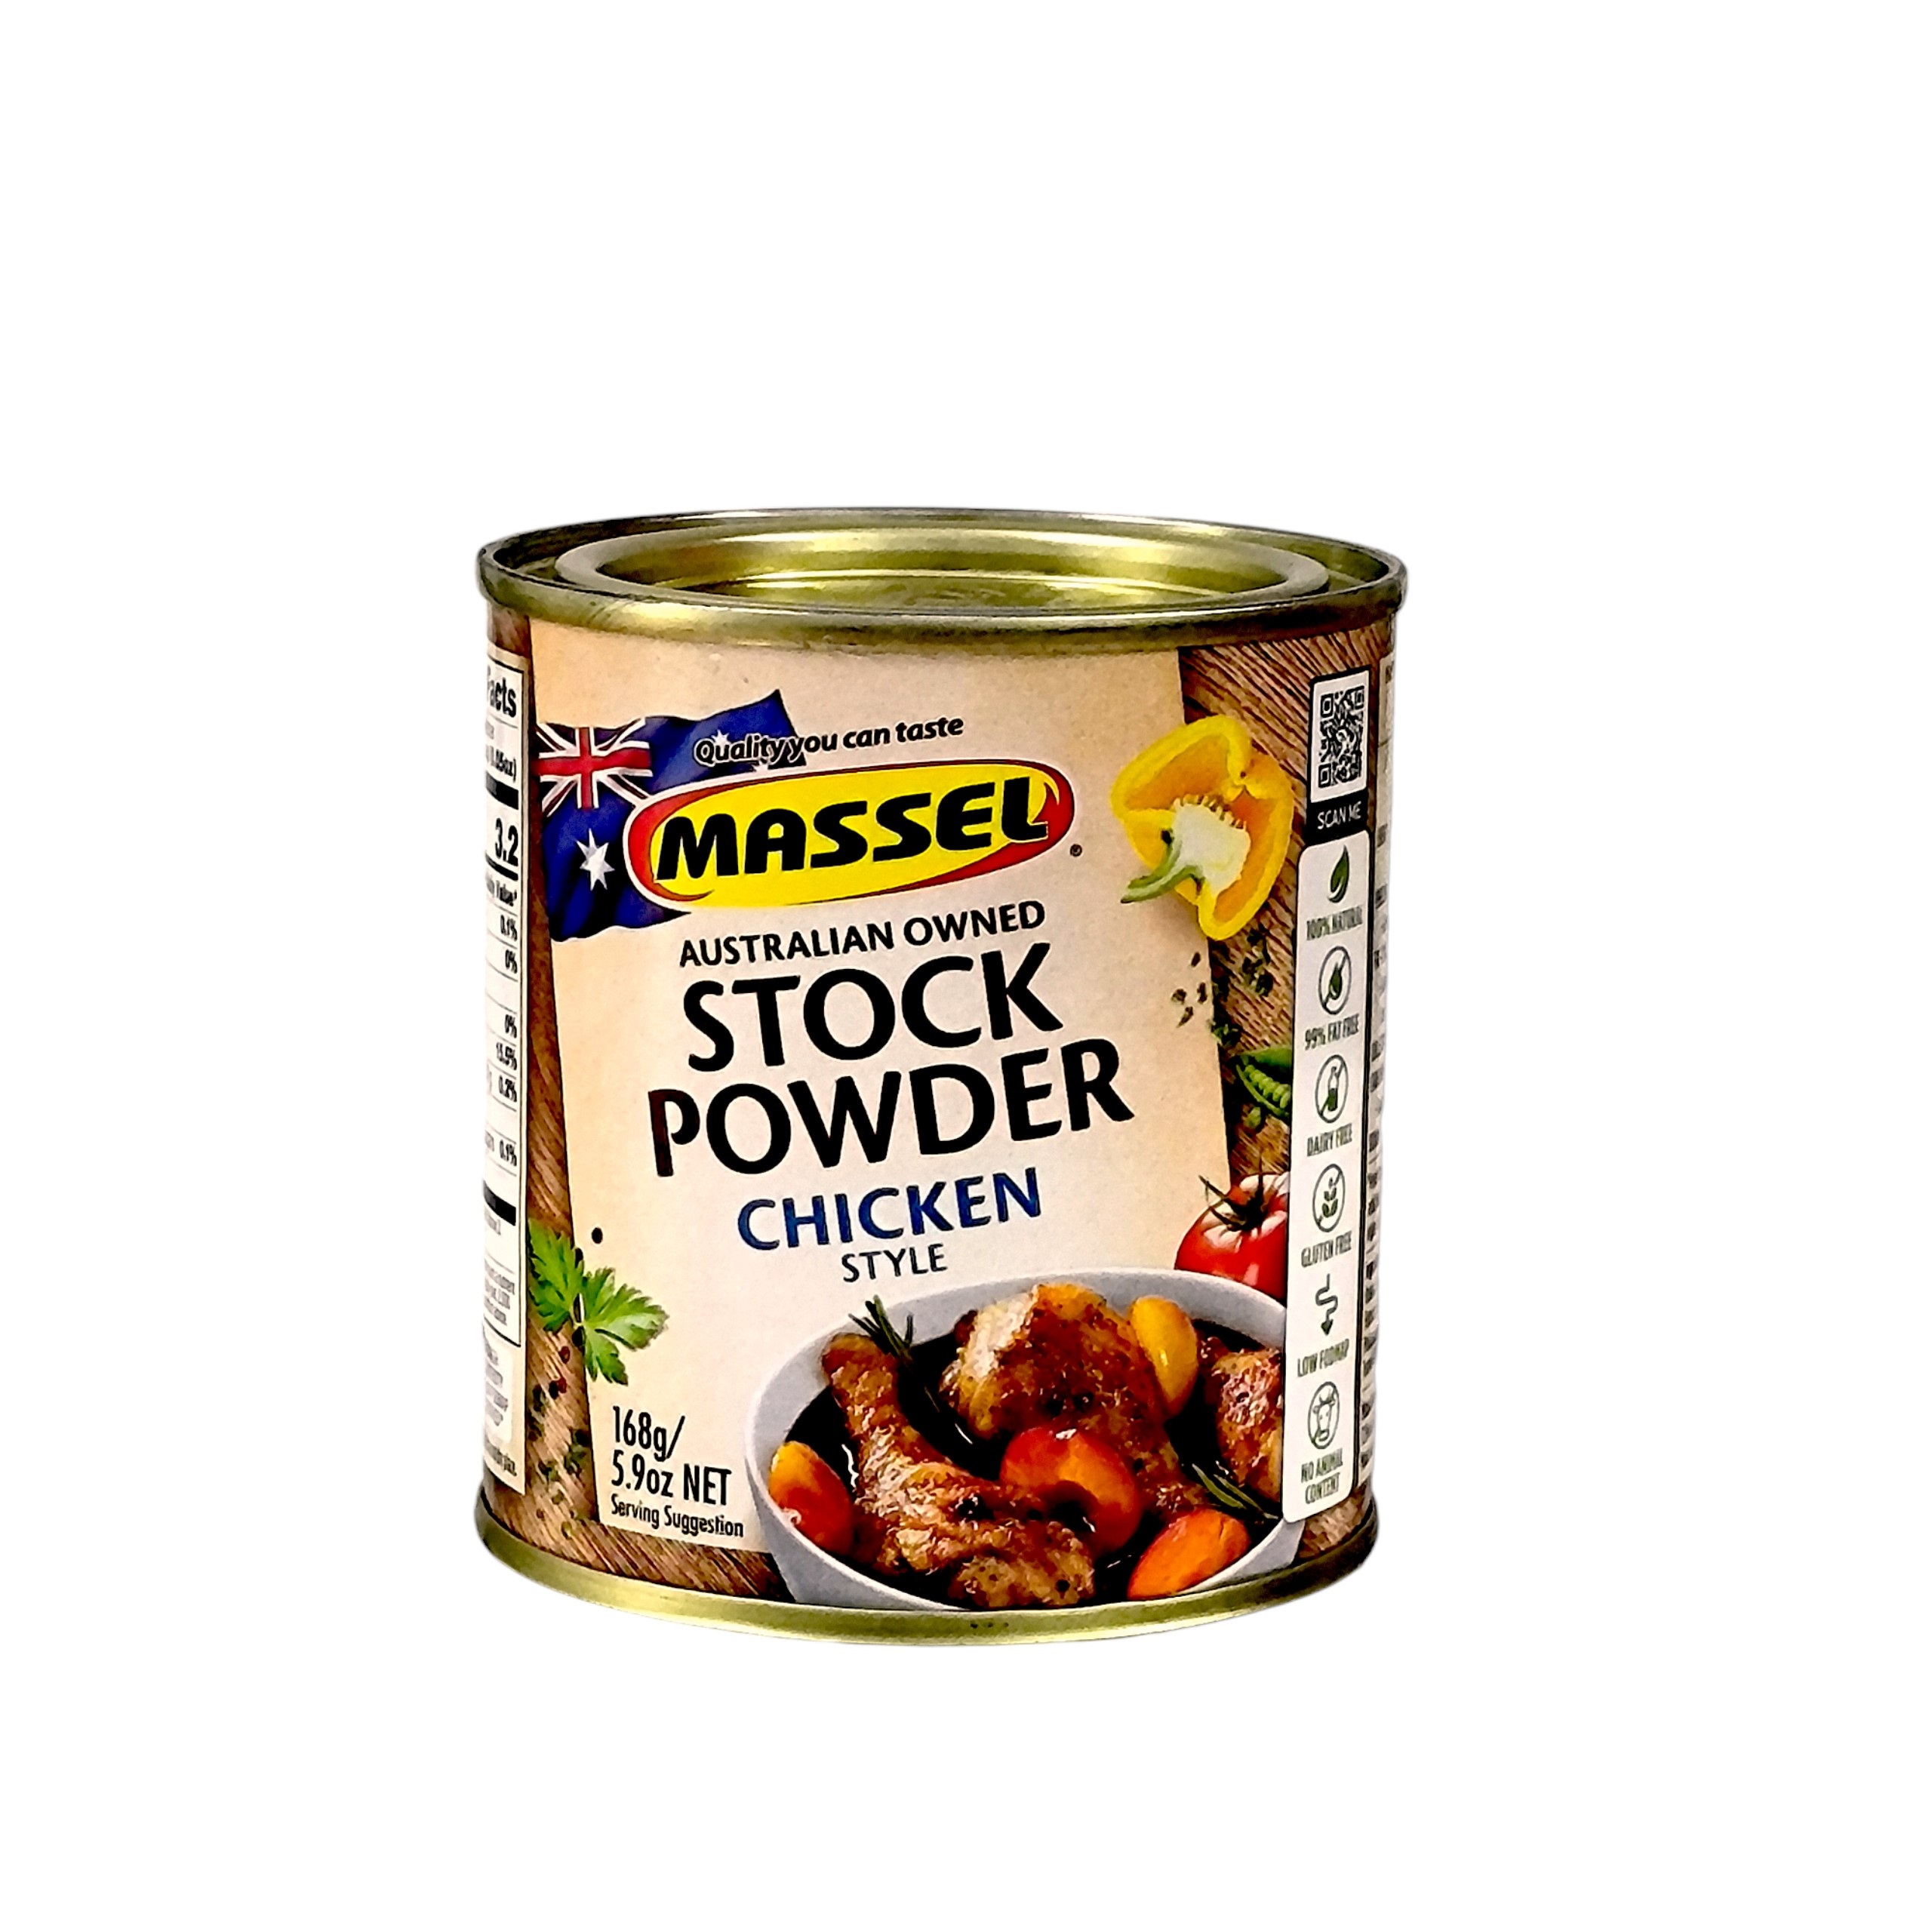 Massel Stock Powder Chicken 168g